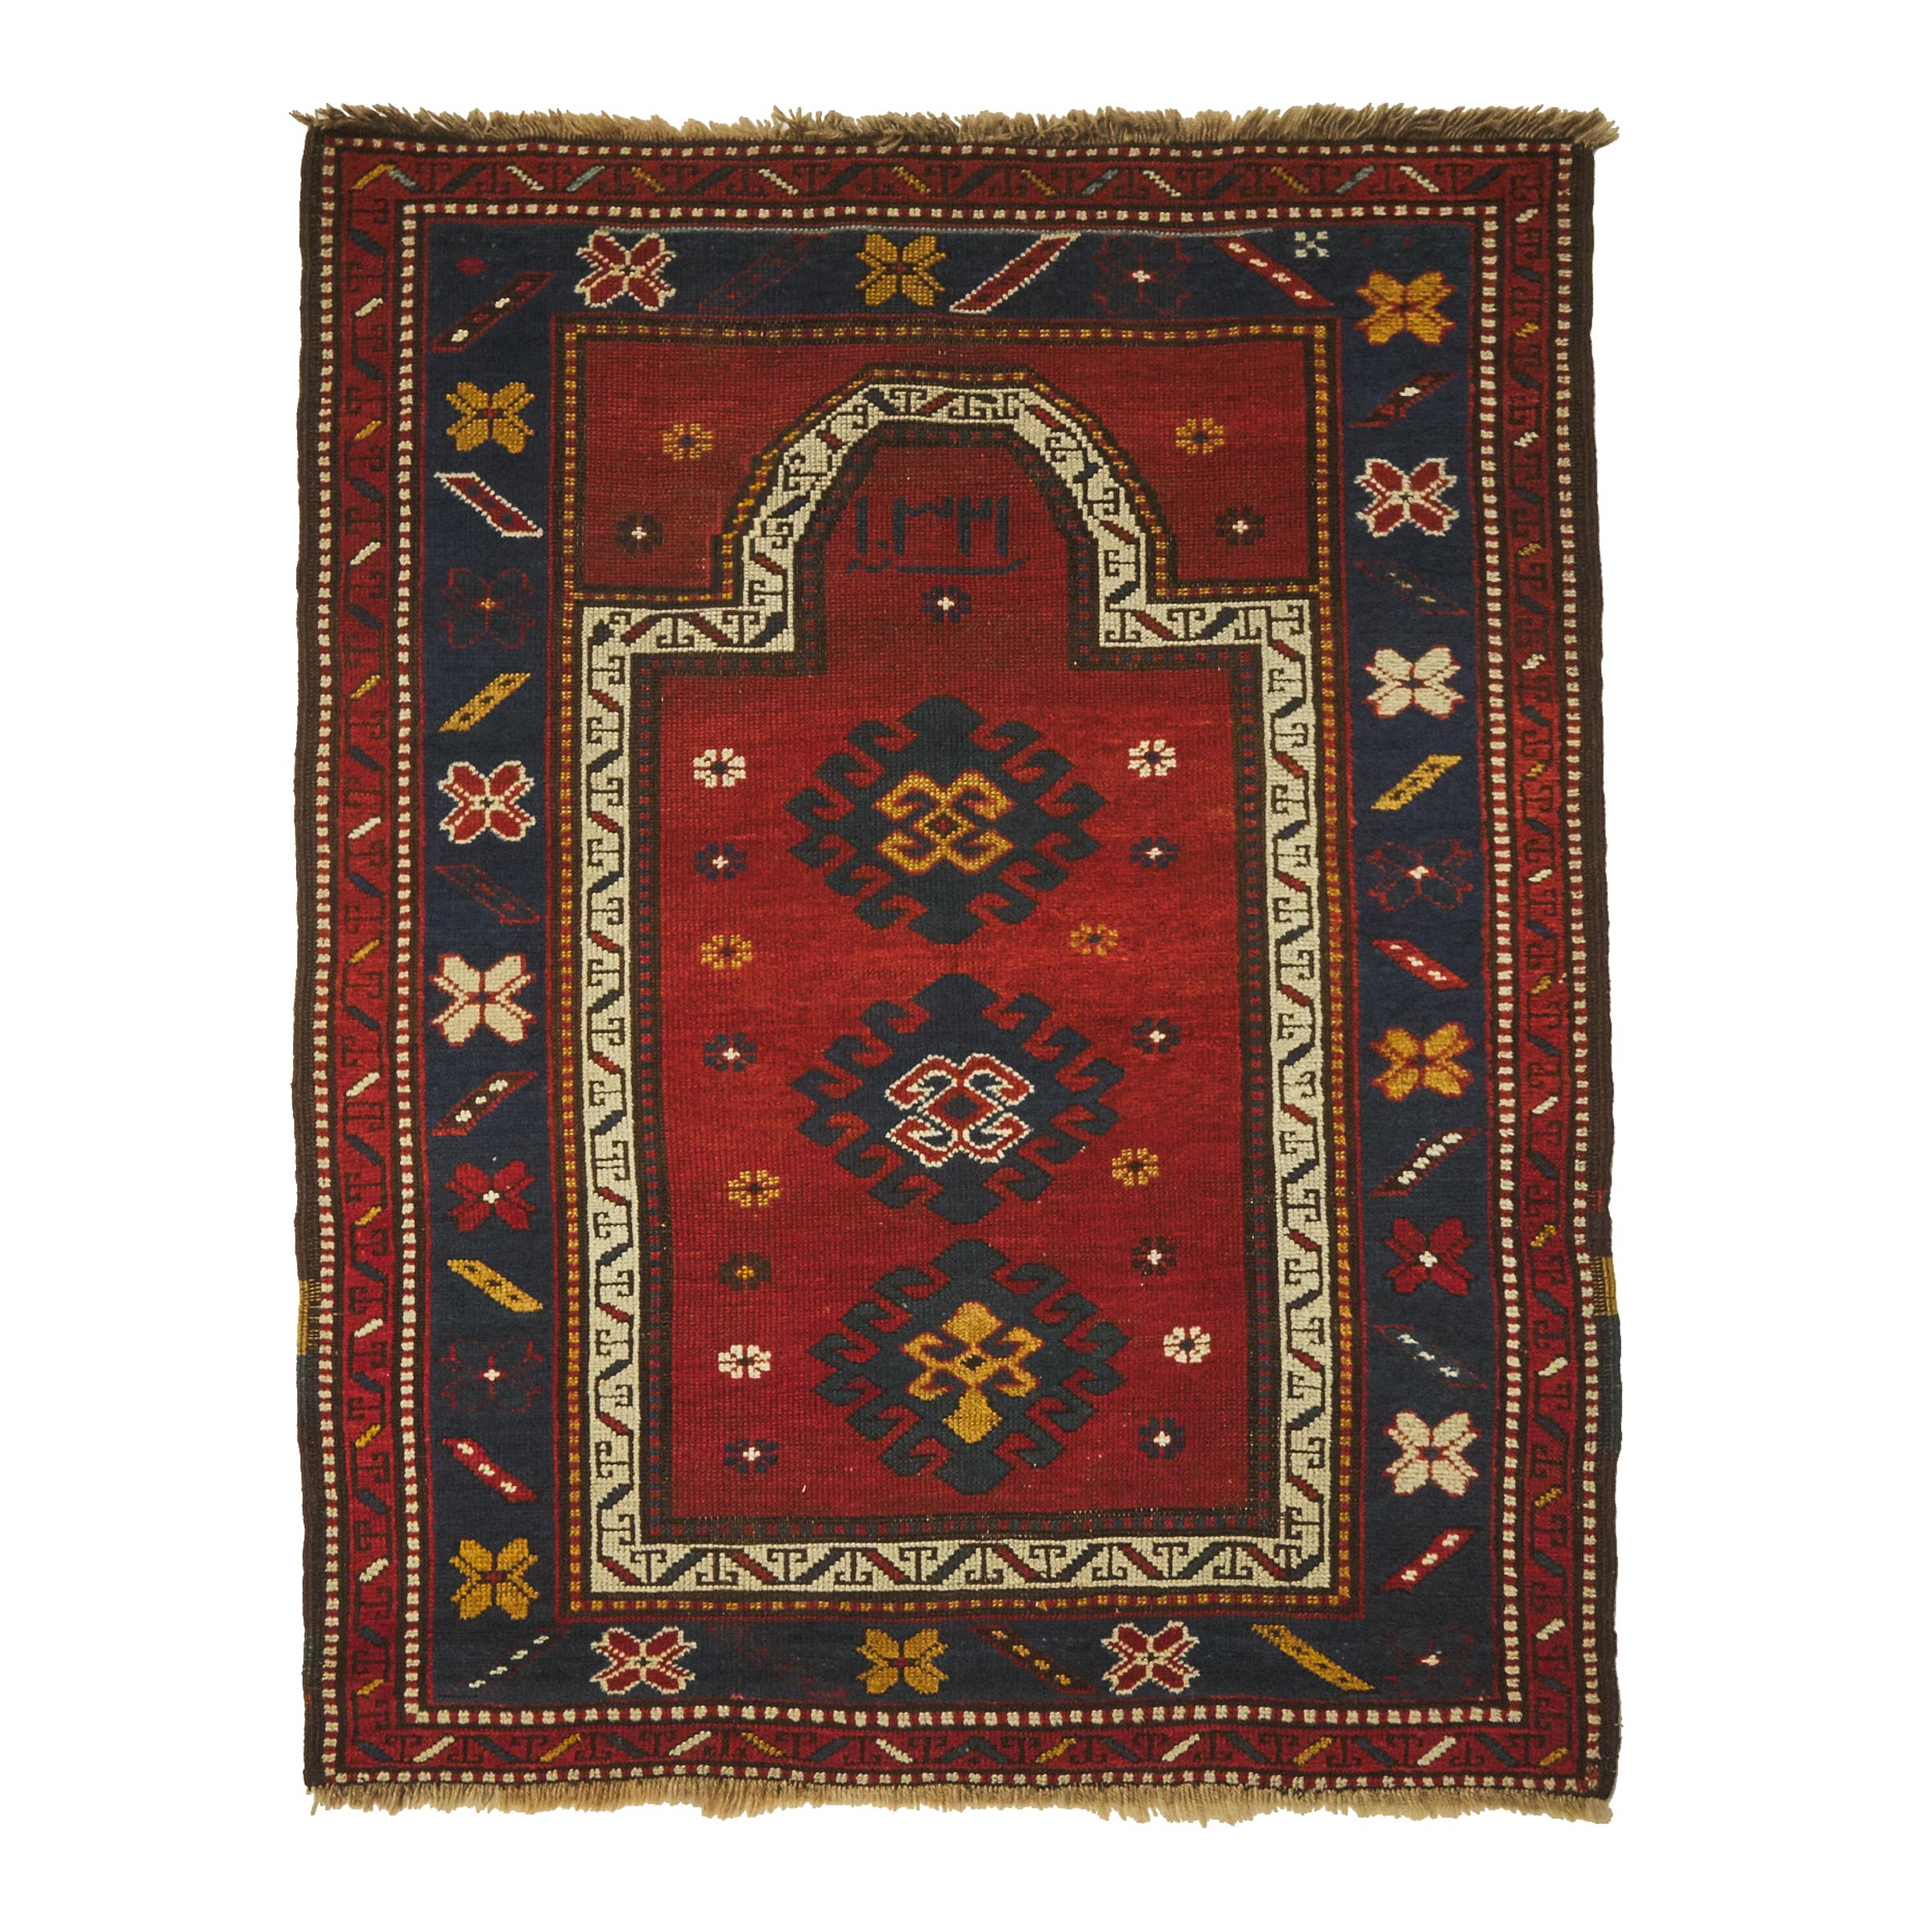 Kazak Prayer Rug, Caucasian, dated 1903